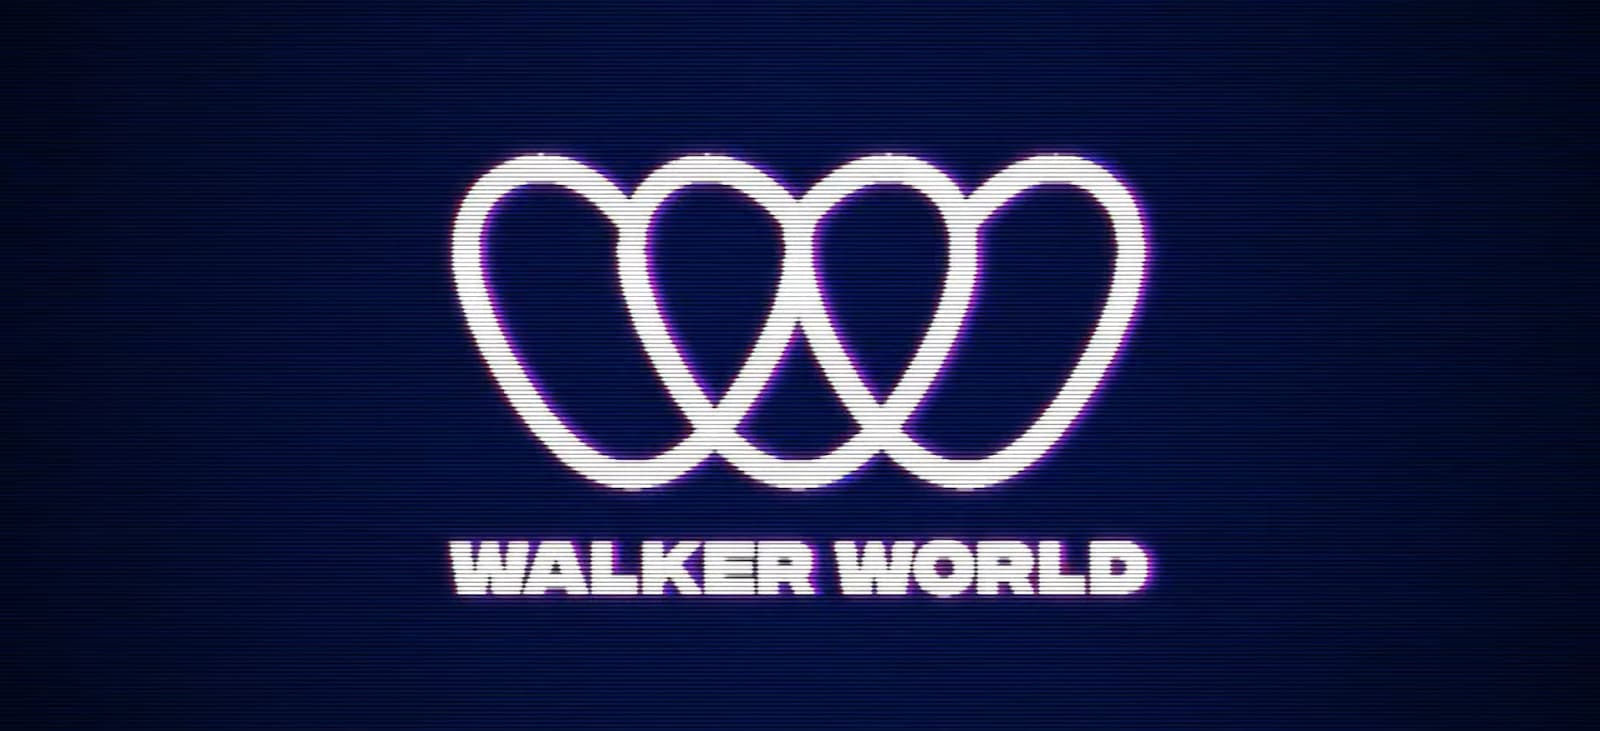 A neon sign logo for "Walker World" set against a dark background